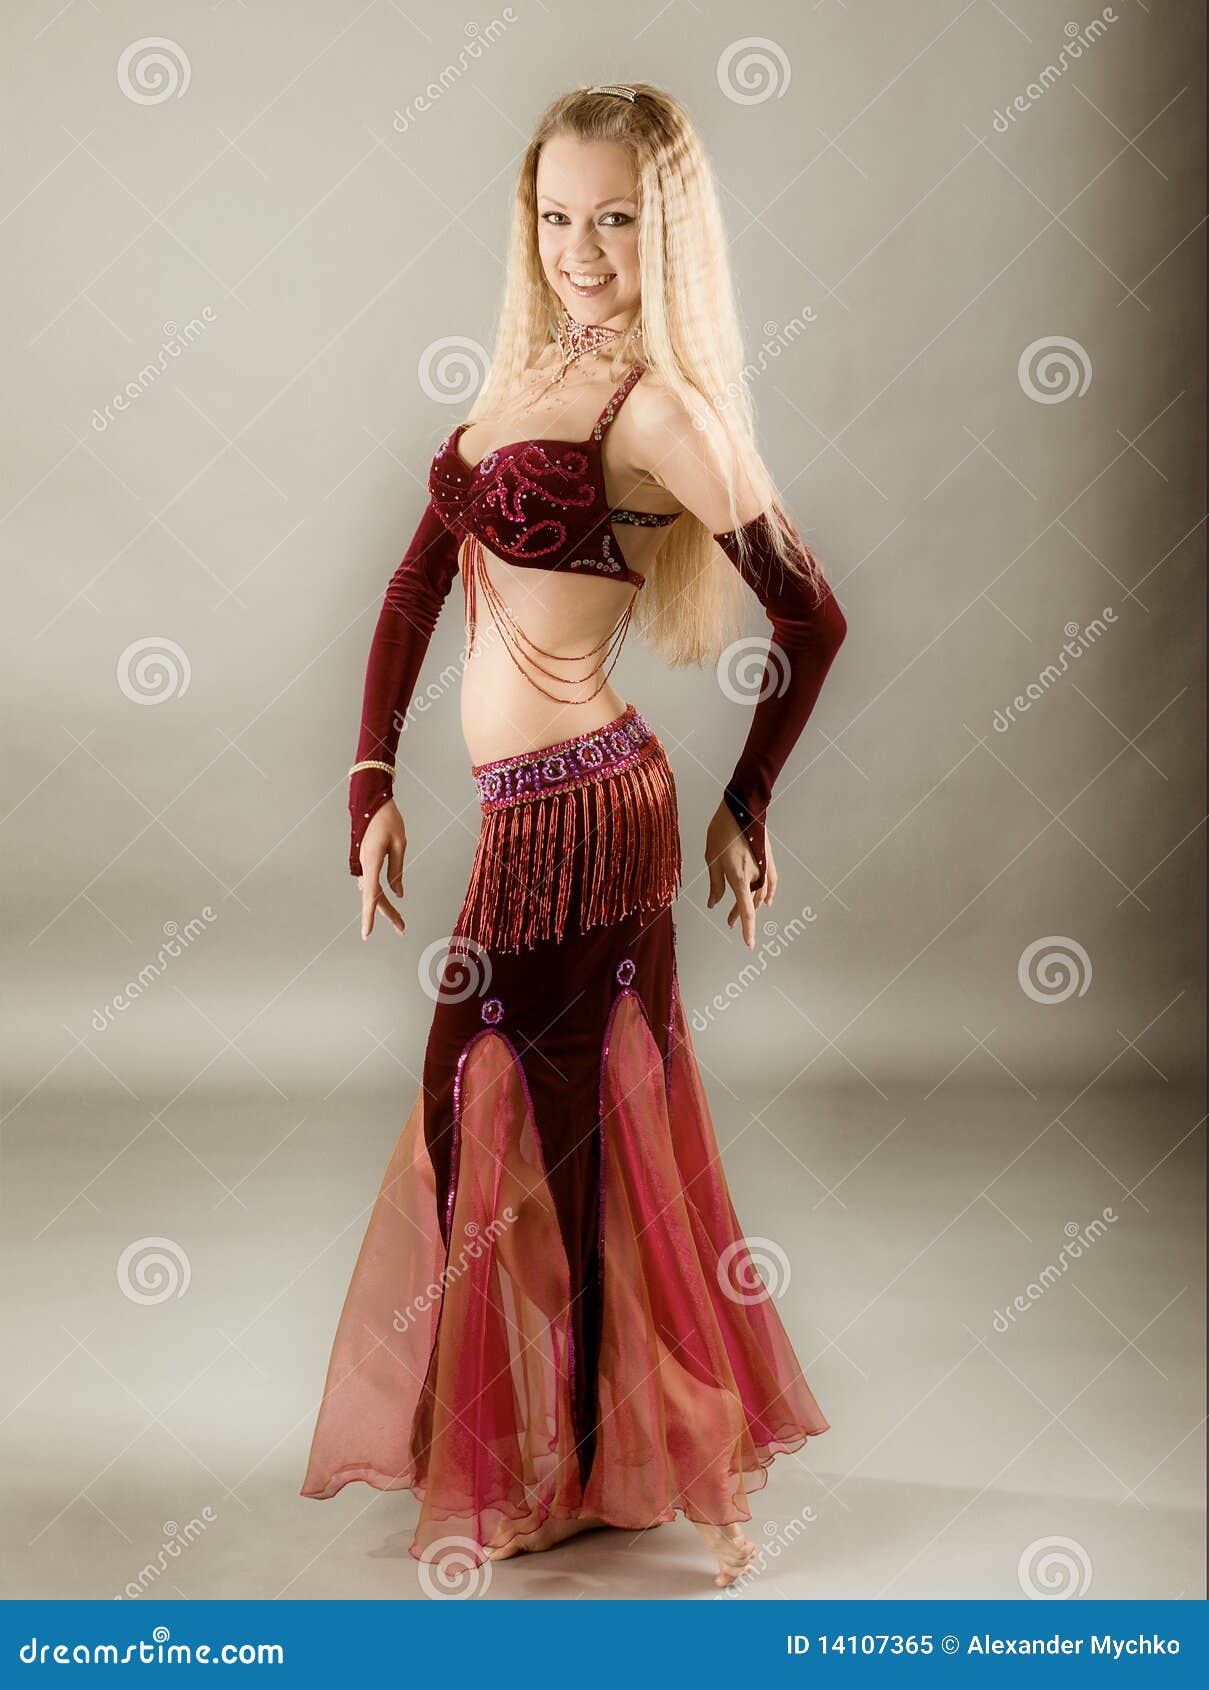 Details more than 137 arabic dance dress best